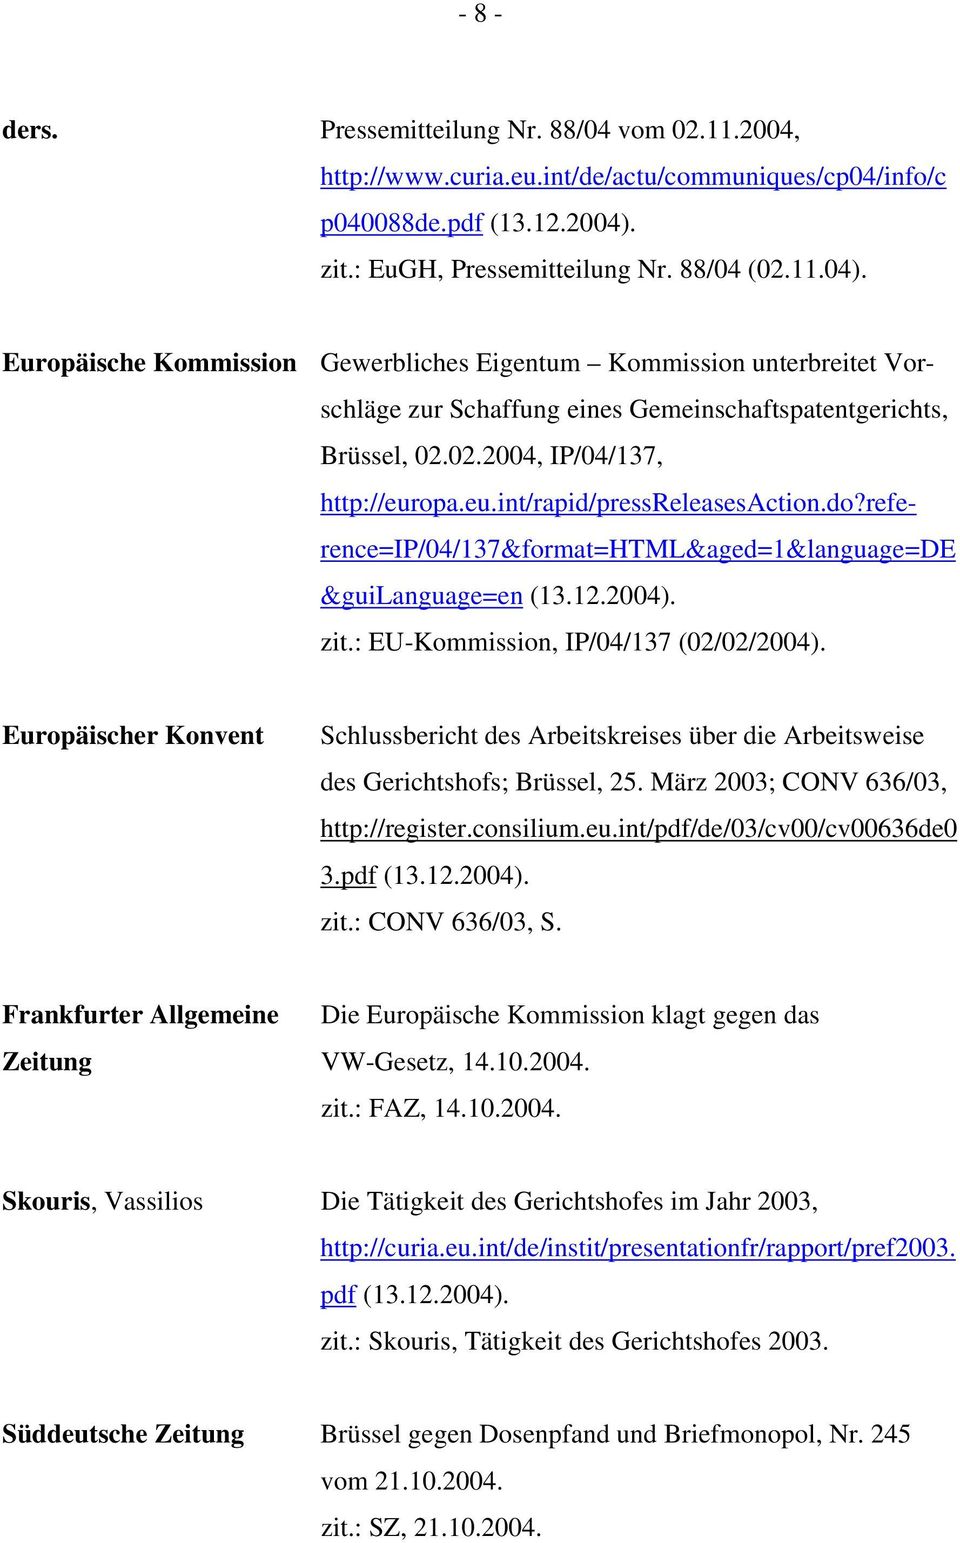 eu.int/rapid/pressreleasesaction.do?reference=ip/04/137&format=html&aged=1&language=de &guilanguage=en (13.12.2004). zit.: EU-Kommission, IP/04/137 (02/02/2004).